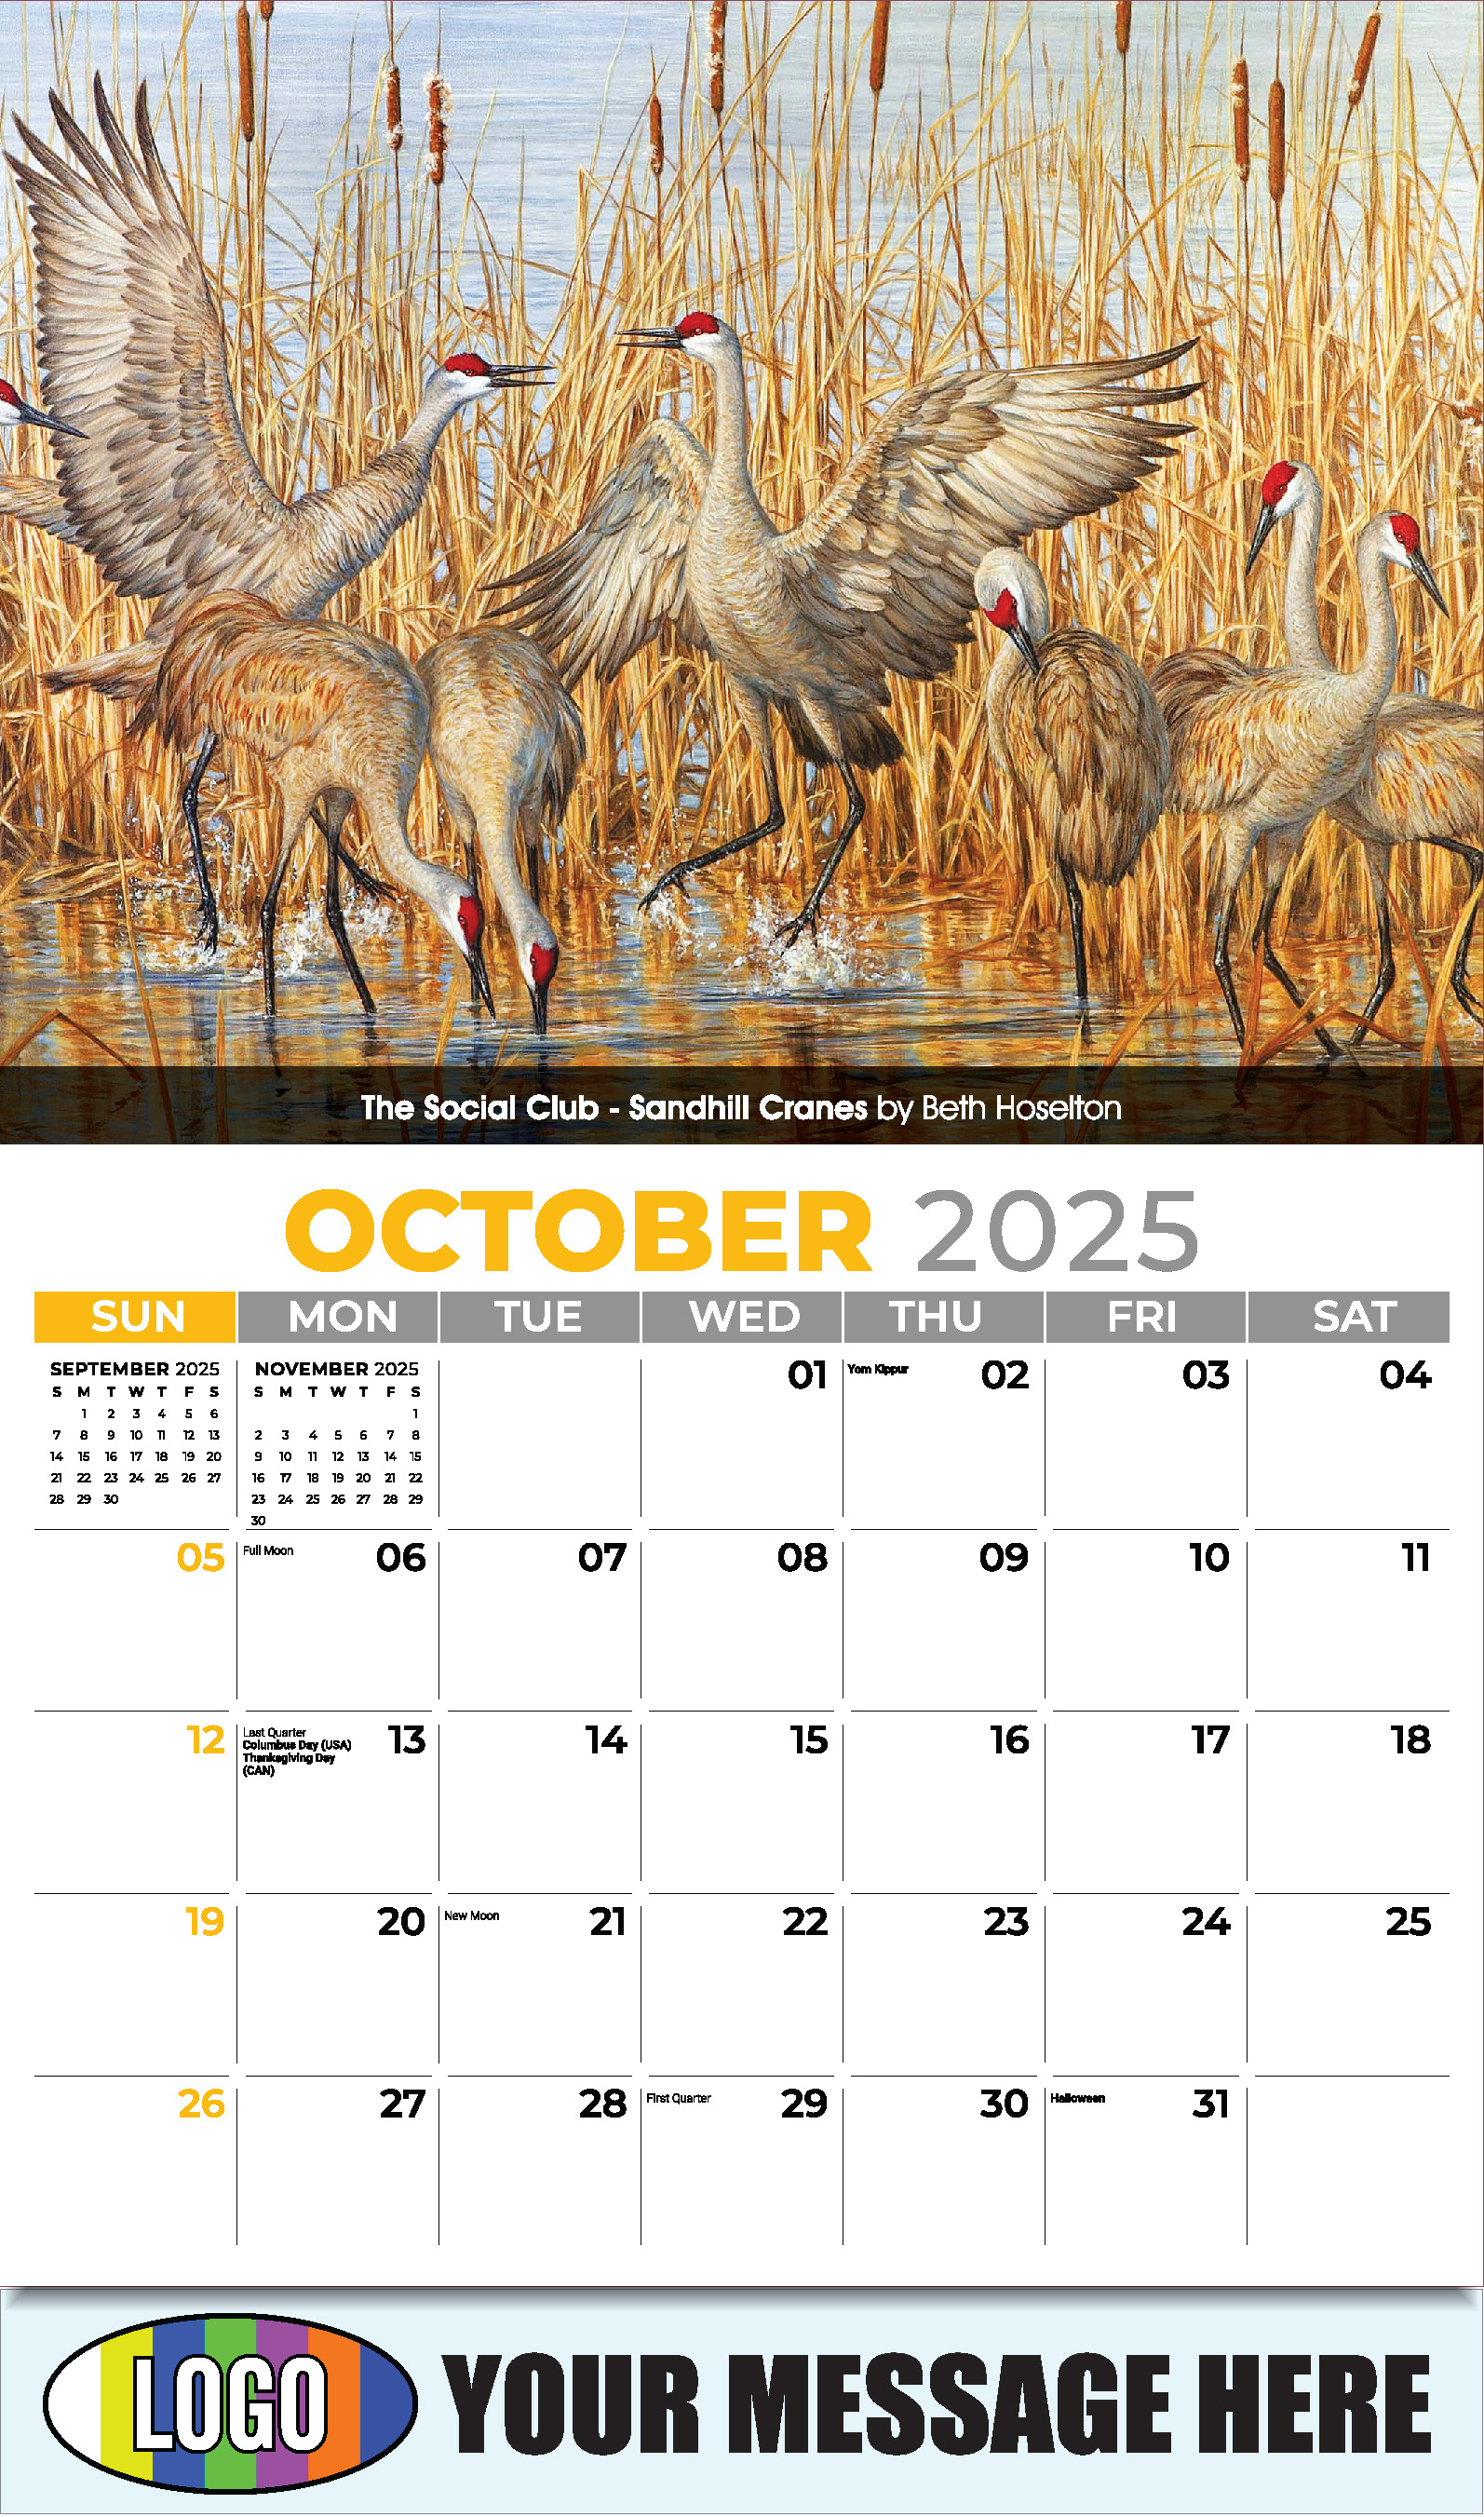 Wildlife Art Portraits 2025 Business Promotion Wall Calendar - October